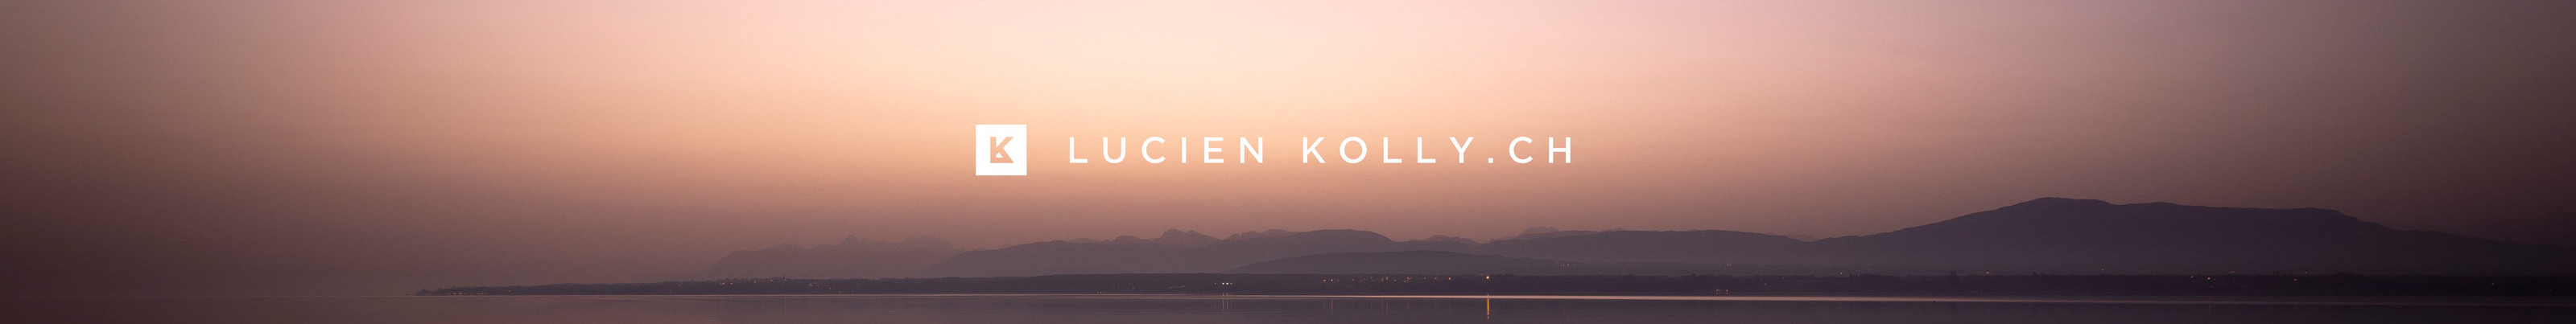 Kolly Lucien's profile banner